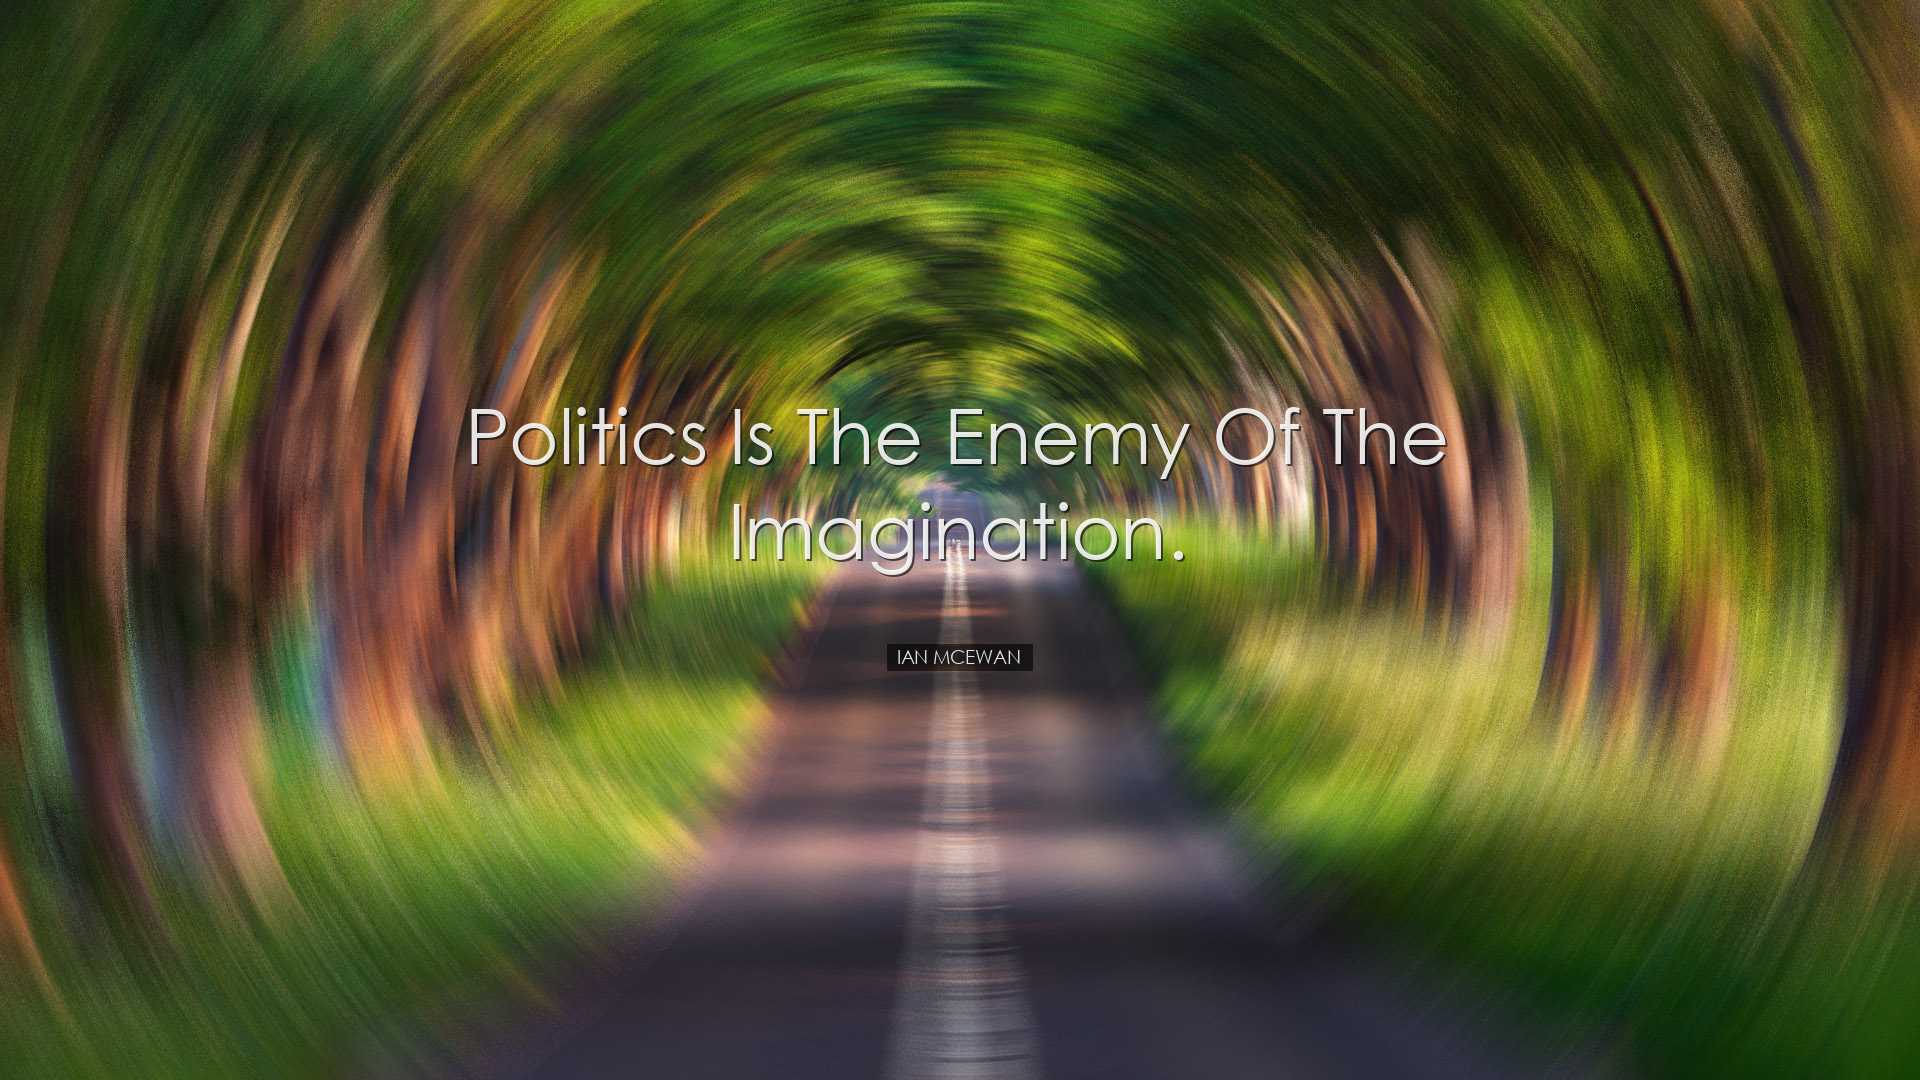 Politics is the enemy of the imagination. - Ian Mcewan